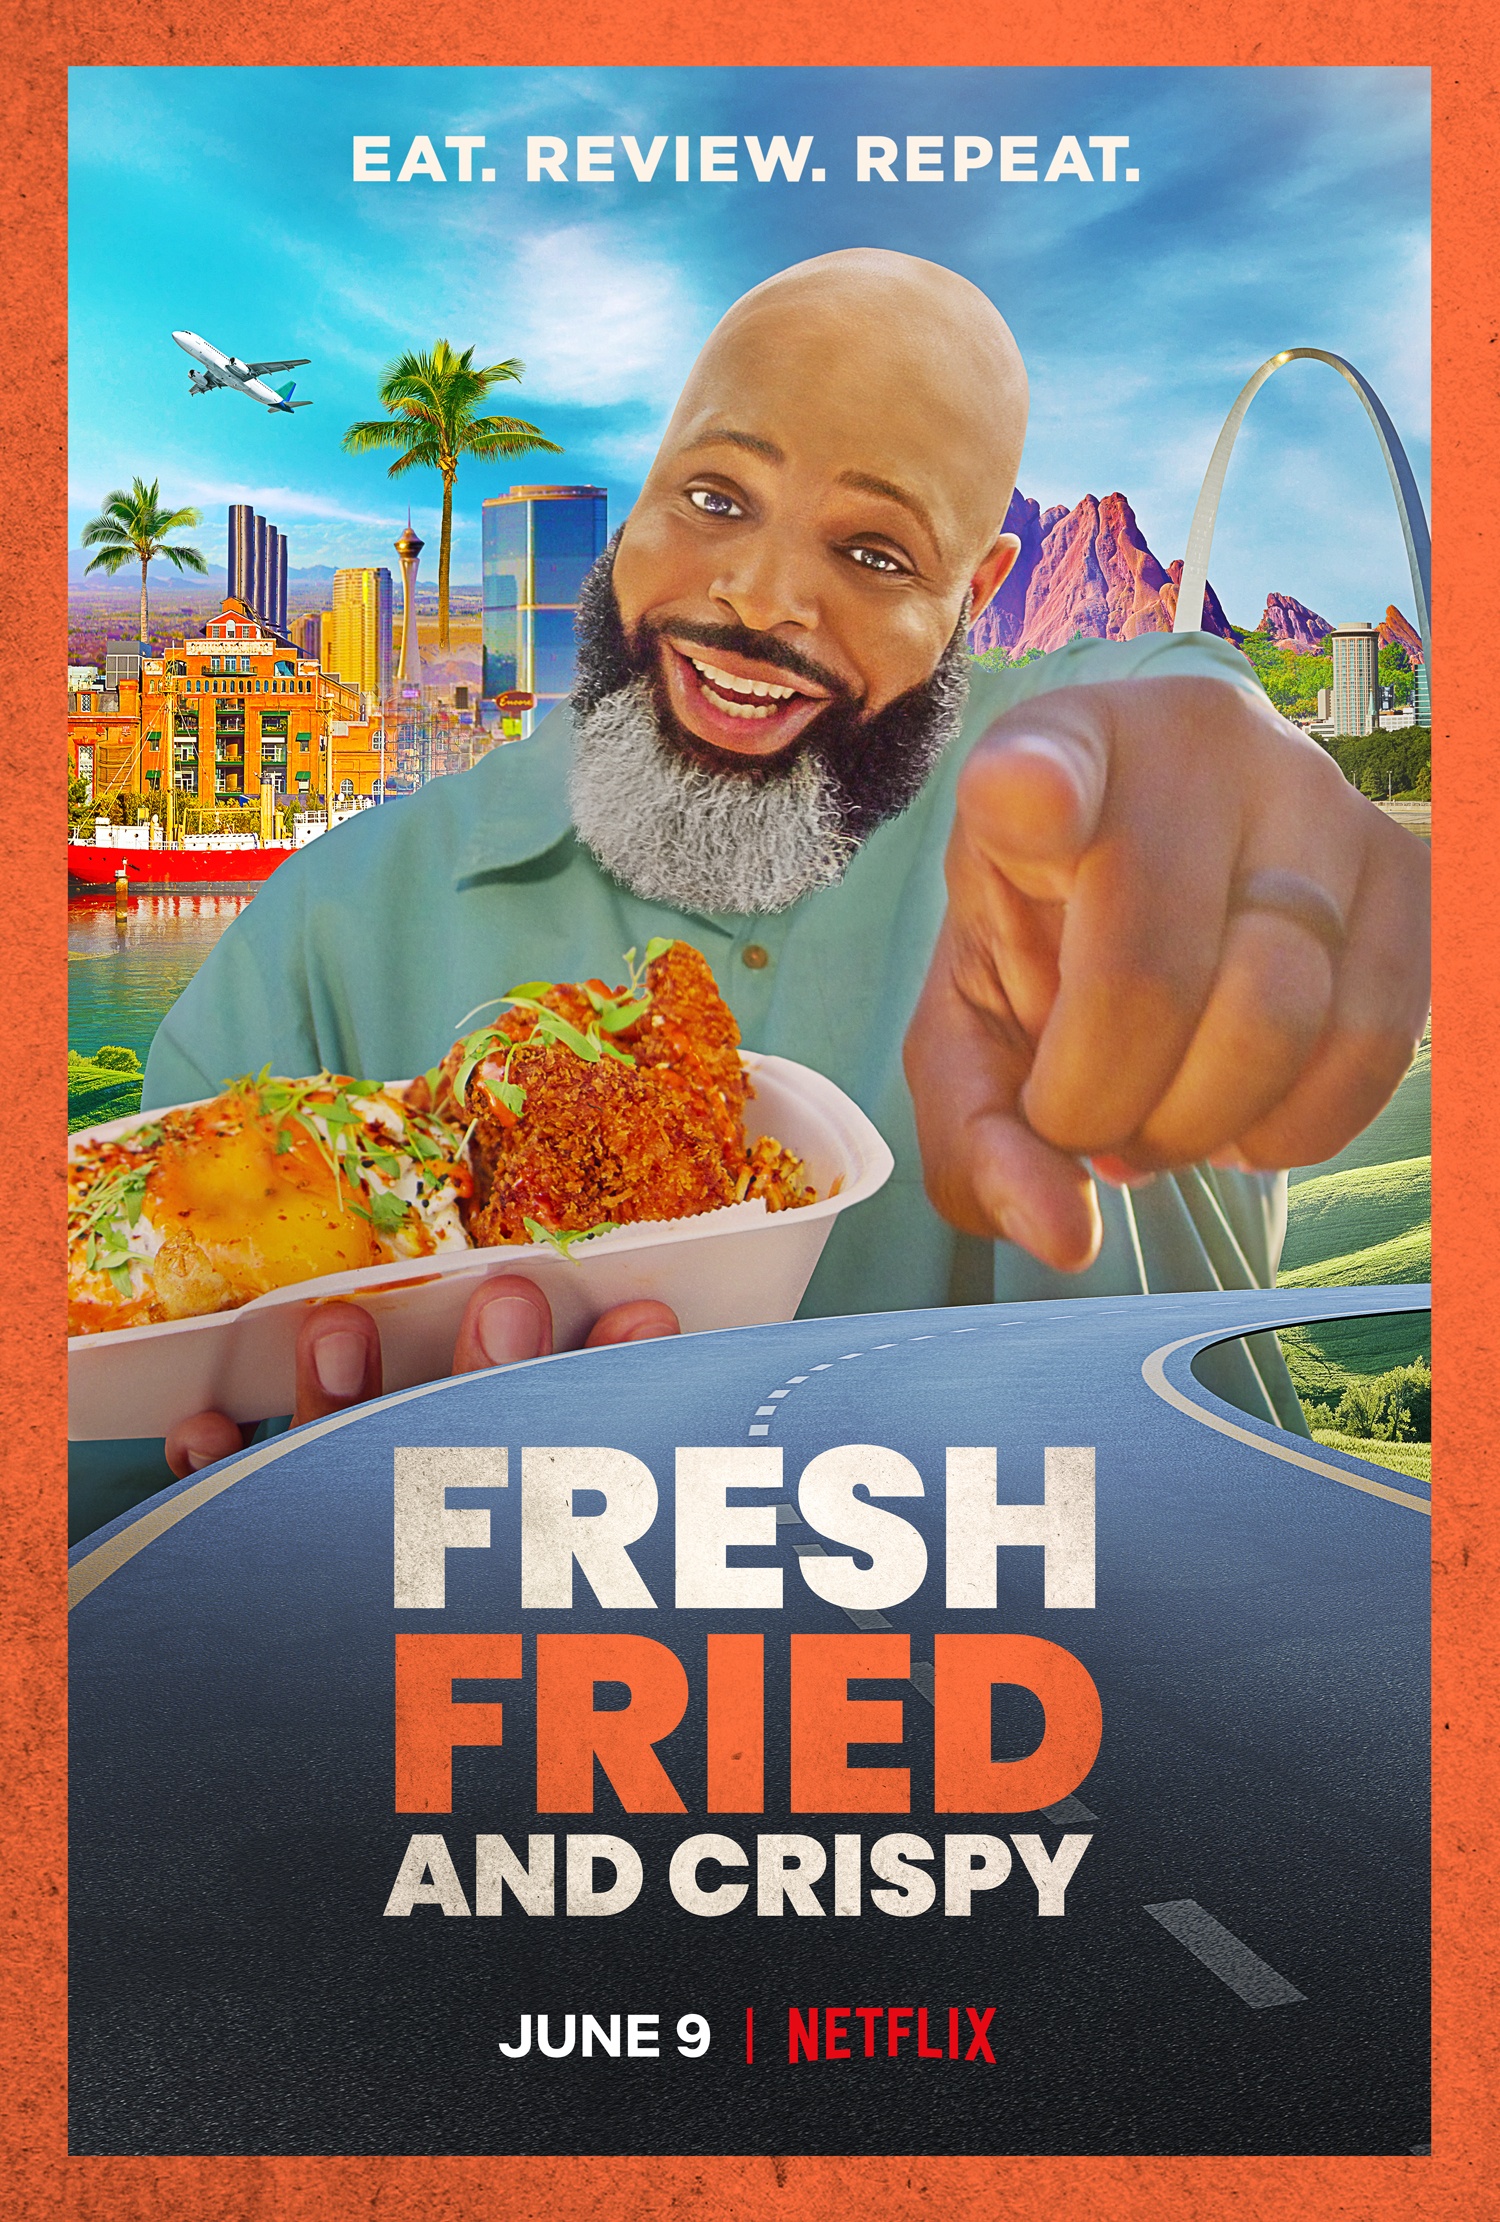 Netflix Series: Fresh Fried & Crispy Starring Daym Drops